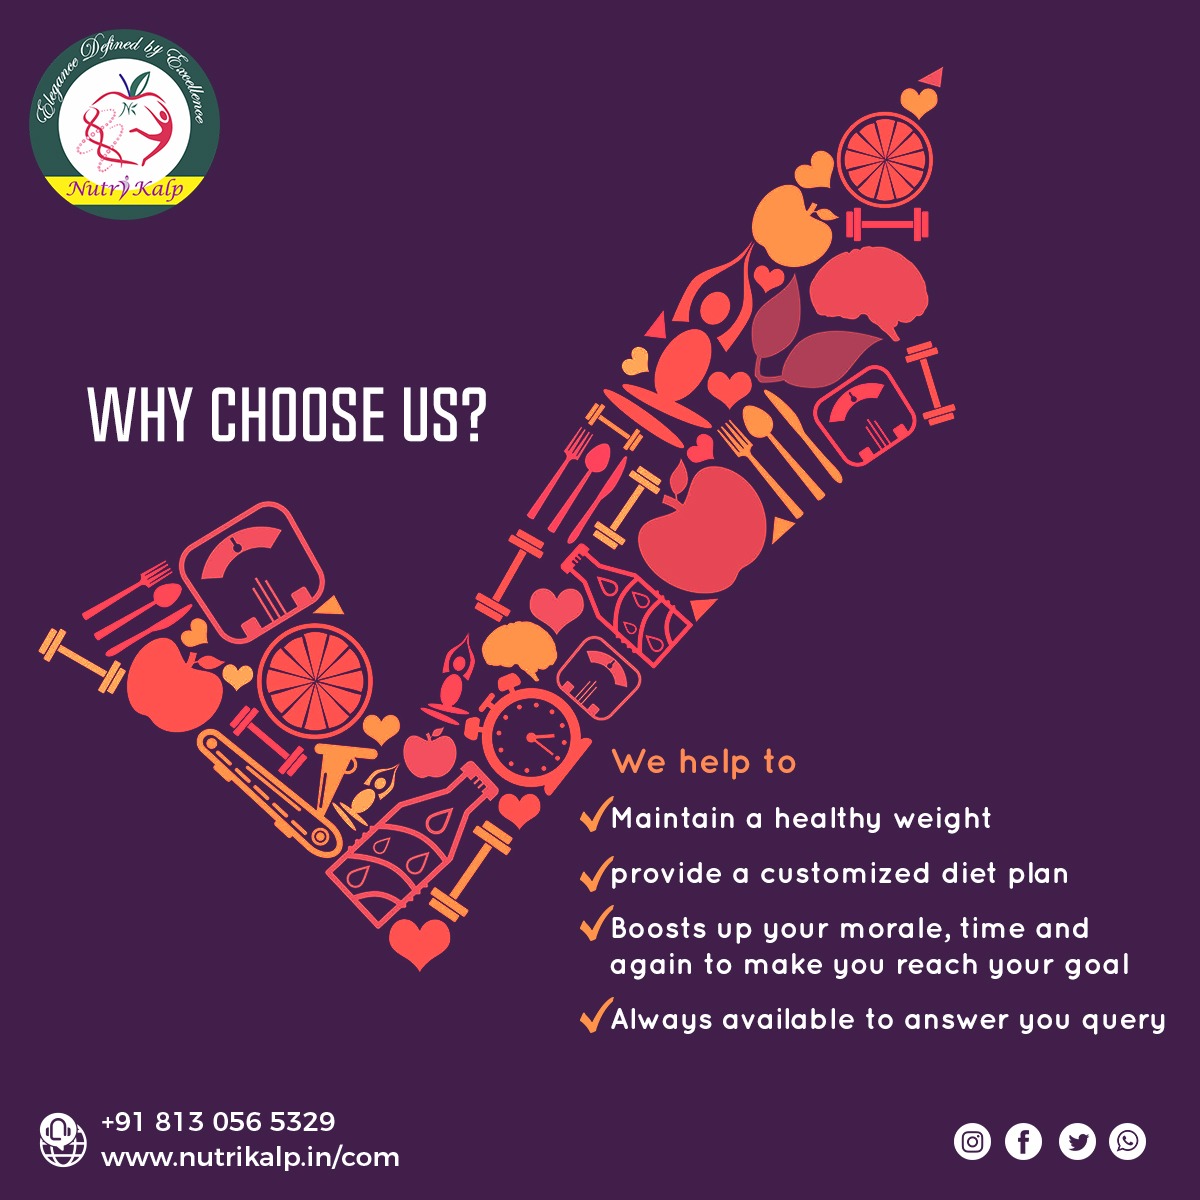 WHY CHOOSE US